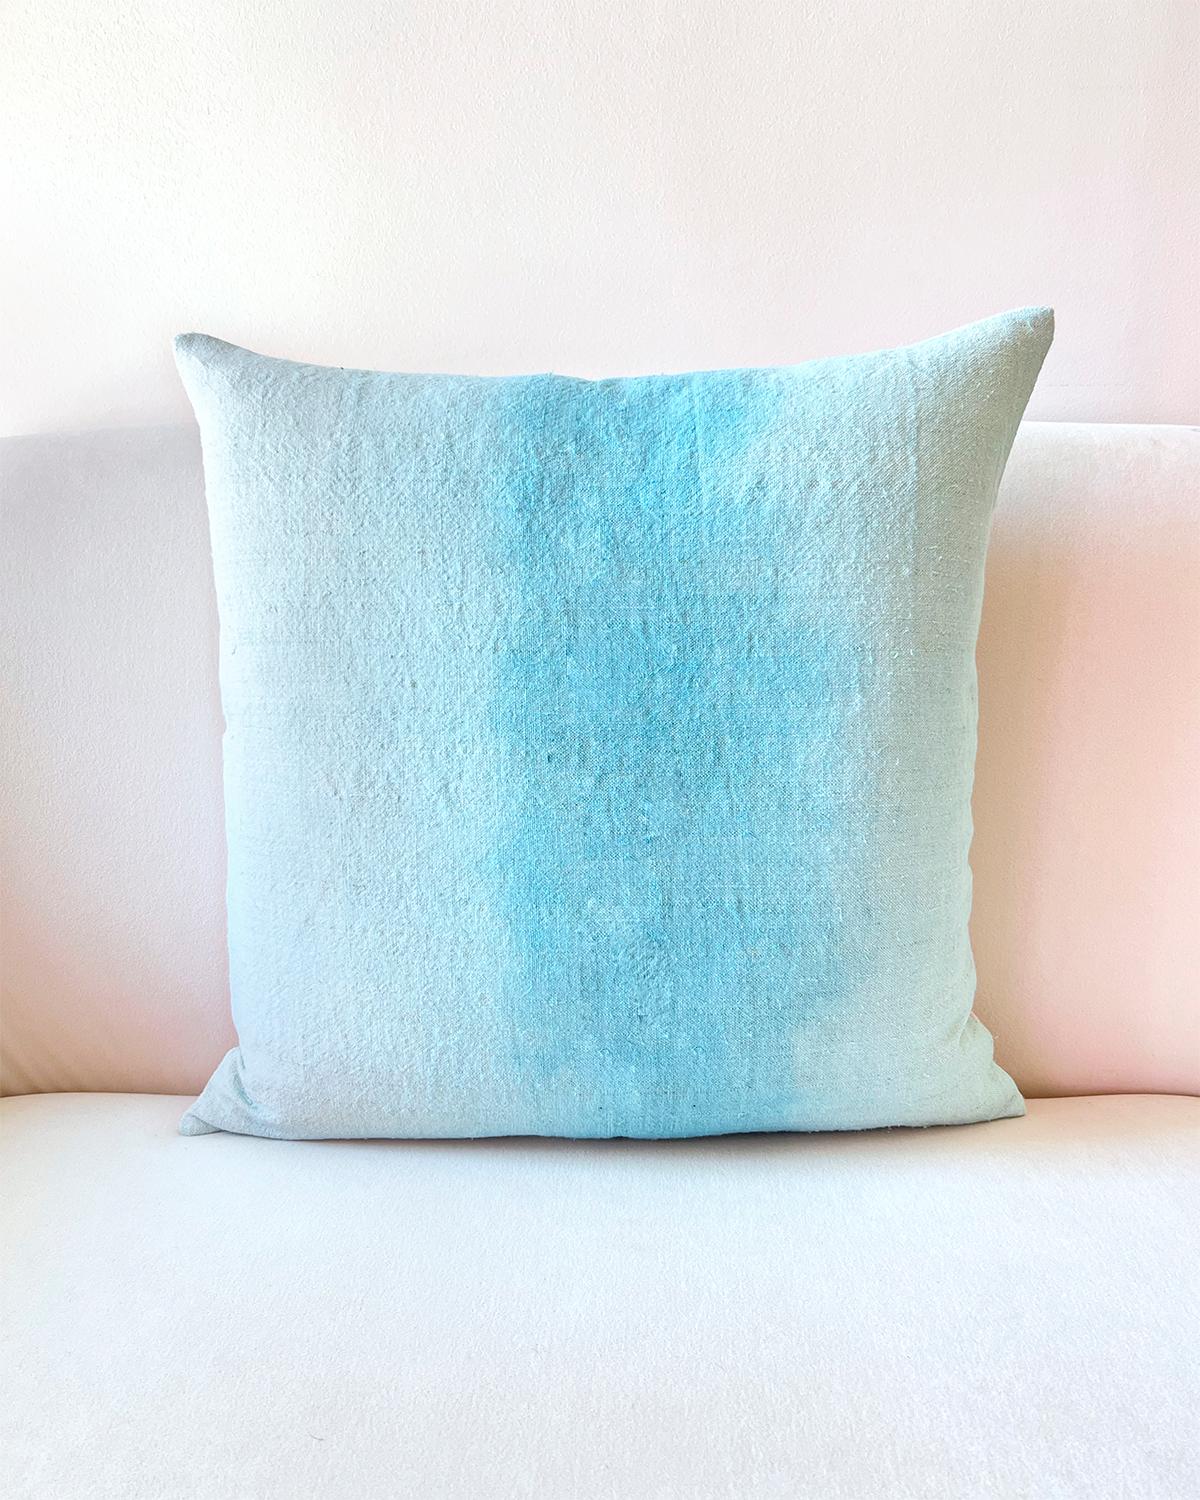 Organic Modern Espanyolet Blue Ombre Hand-Painted Vintage Linen Pillow 20